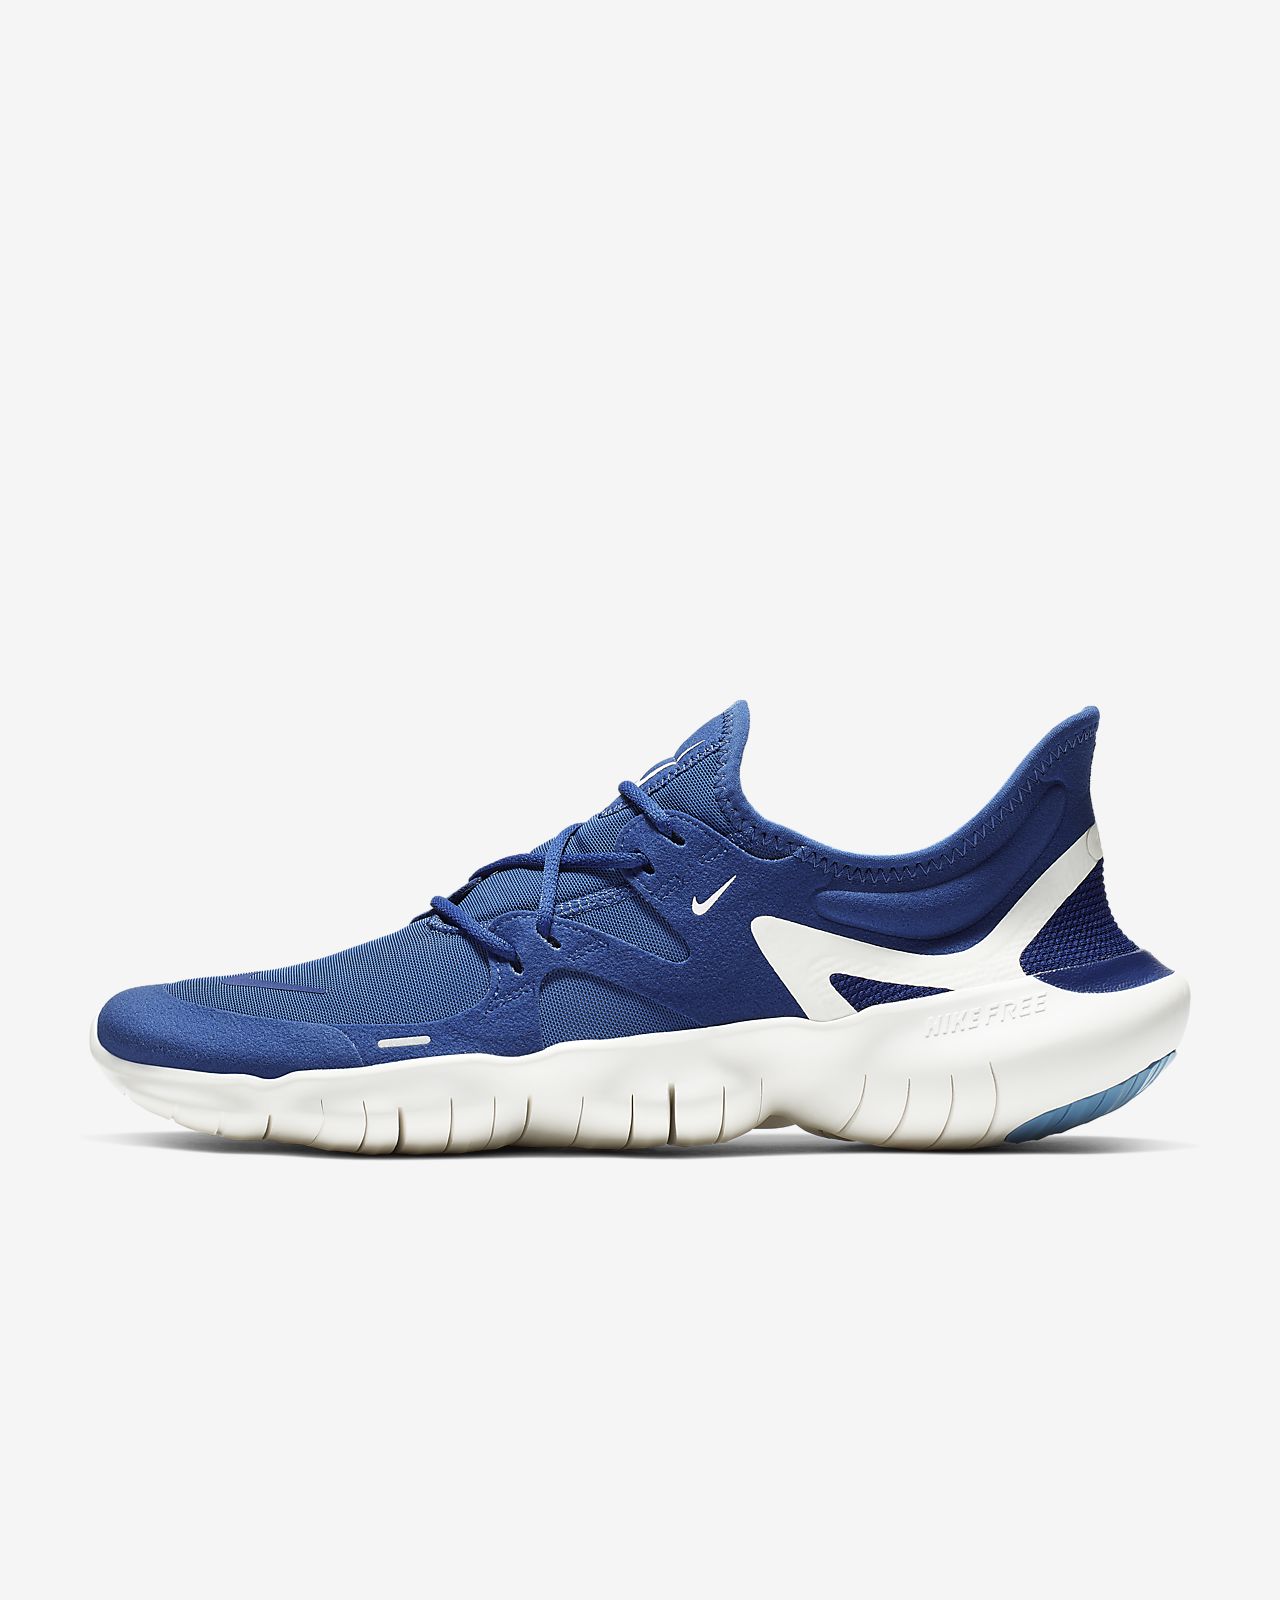 nike free 5.0 blue running shoes